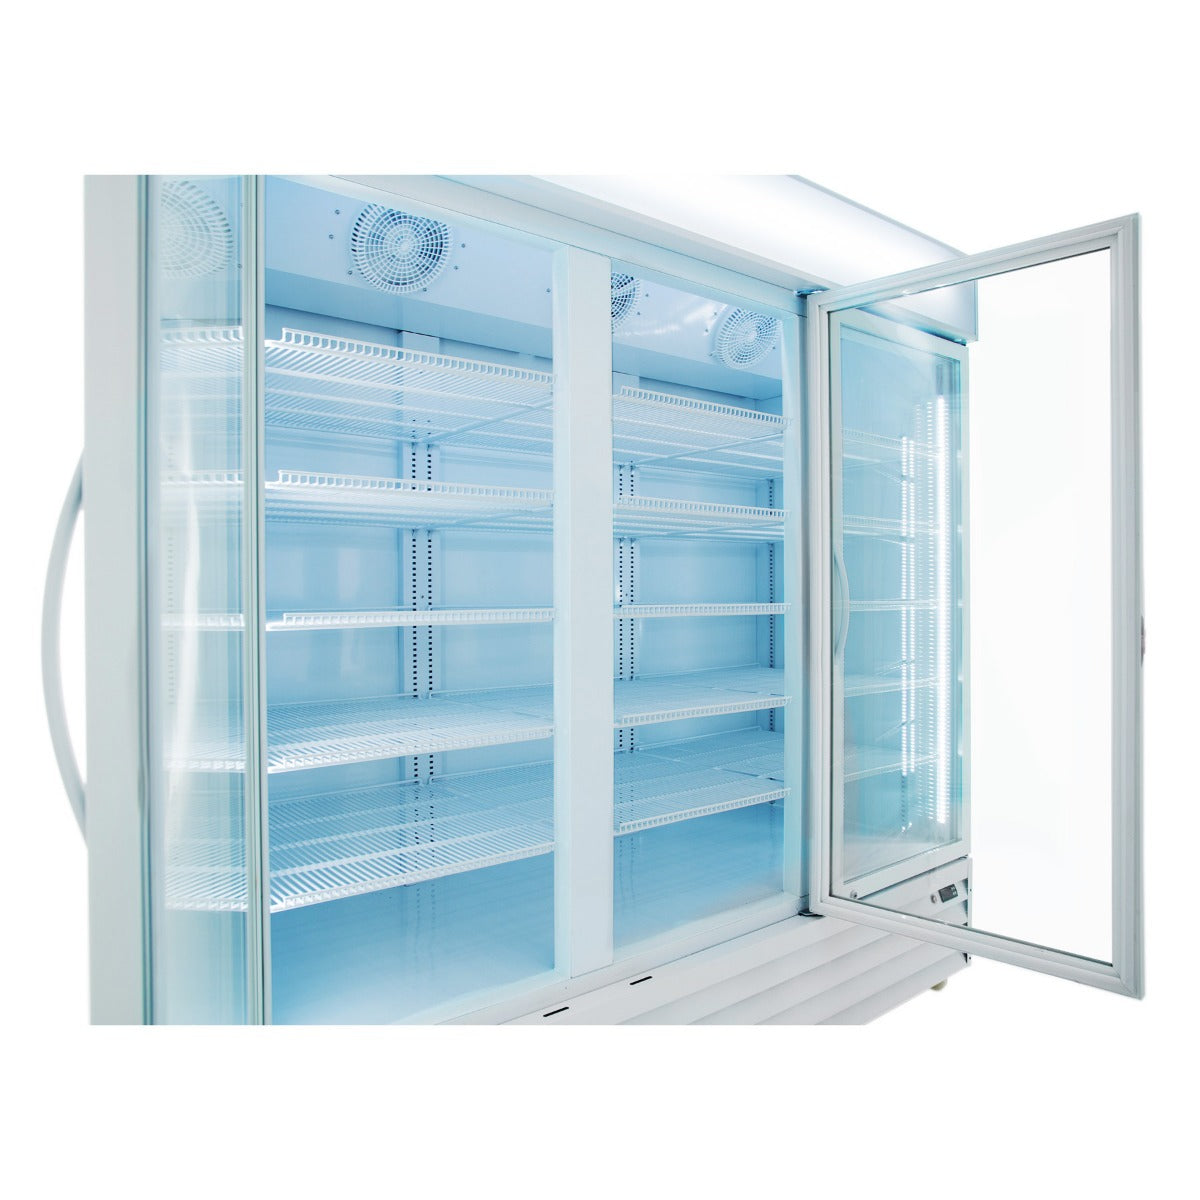 Empura EGM-75W 78.2" Wide Three-Section White Swinging Glass Door Merchandiser Refrigerator With 3 Doors, 75 Cubic Ft, 115 Volts